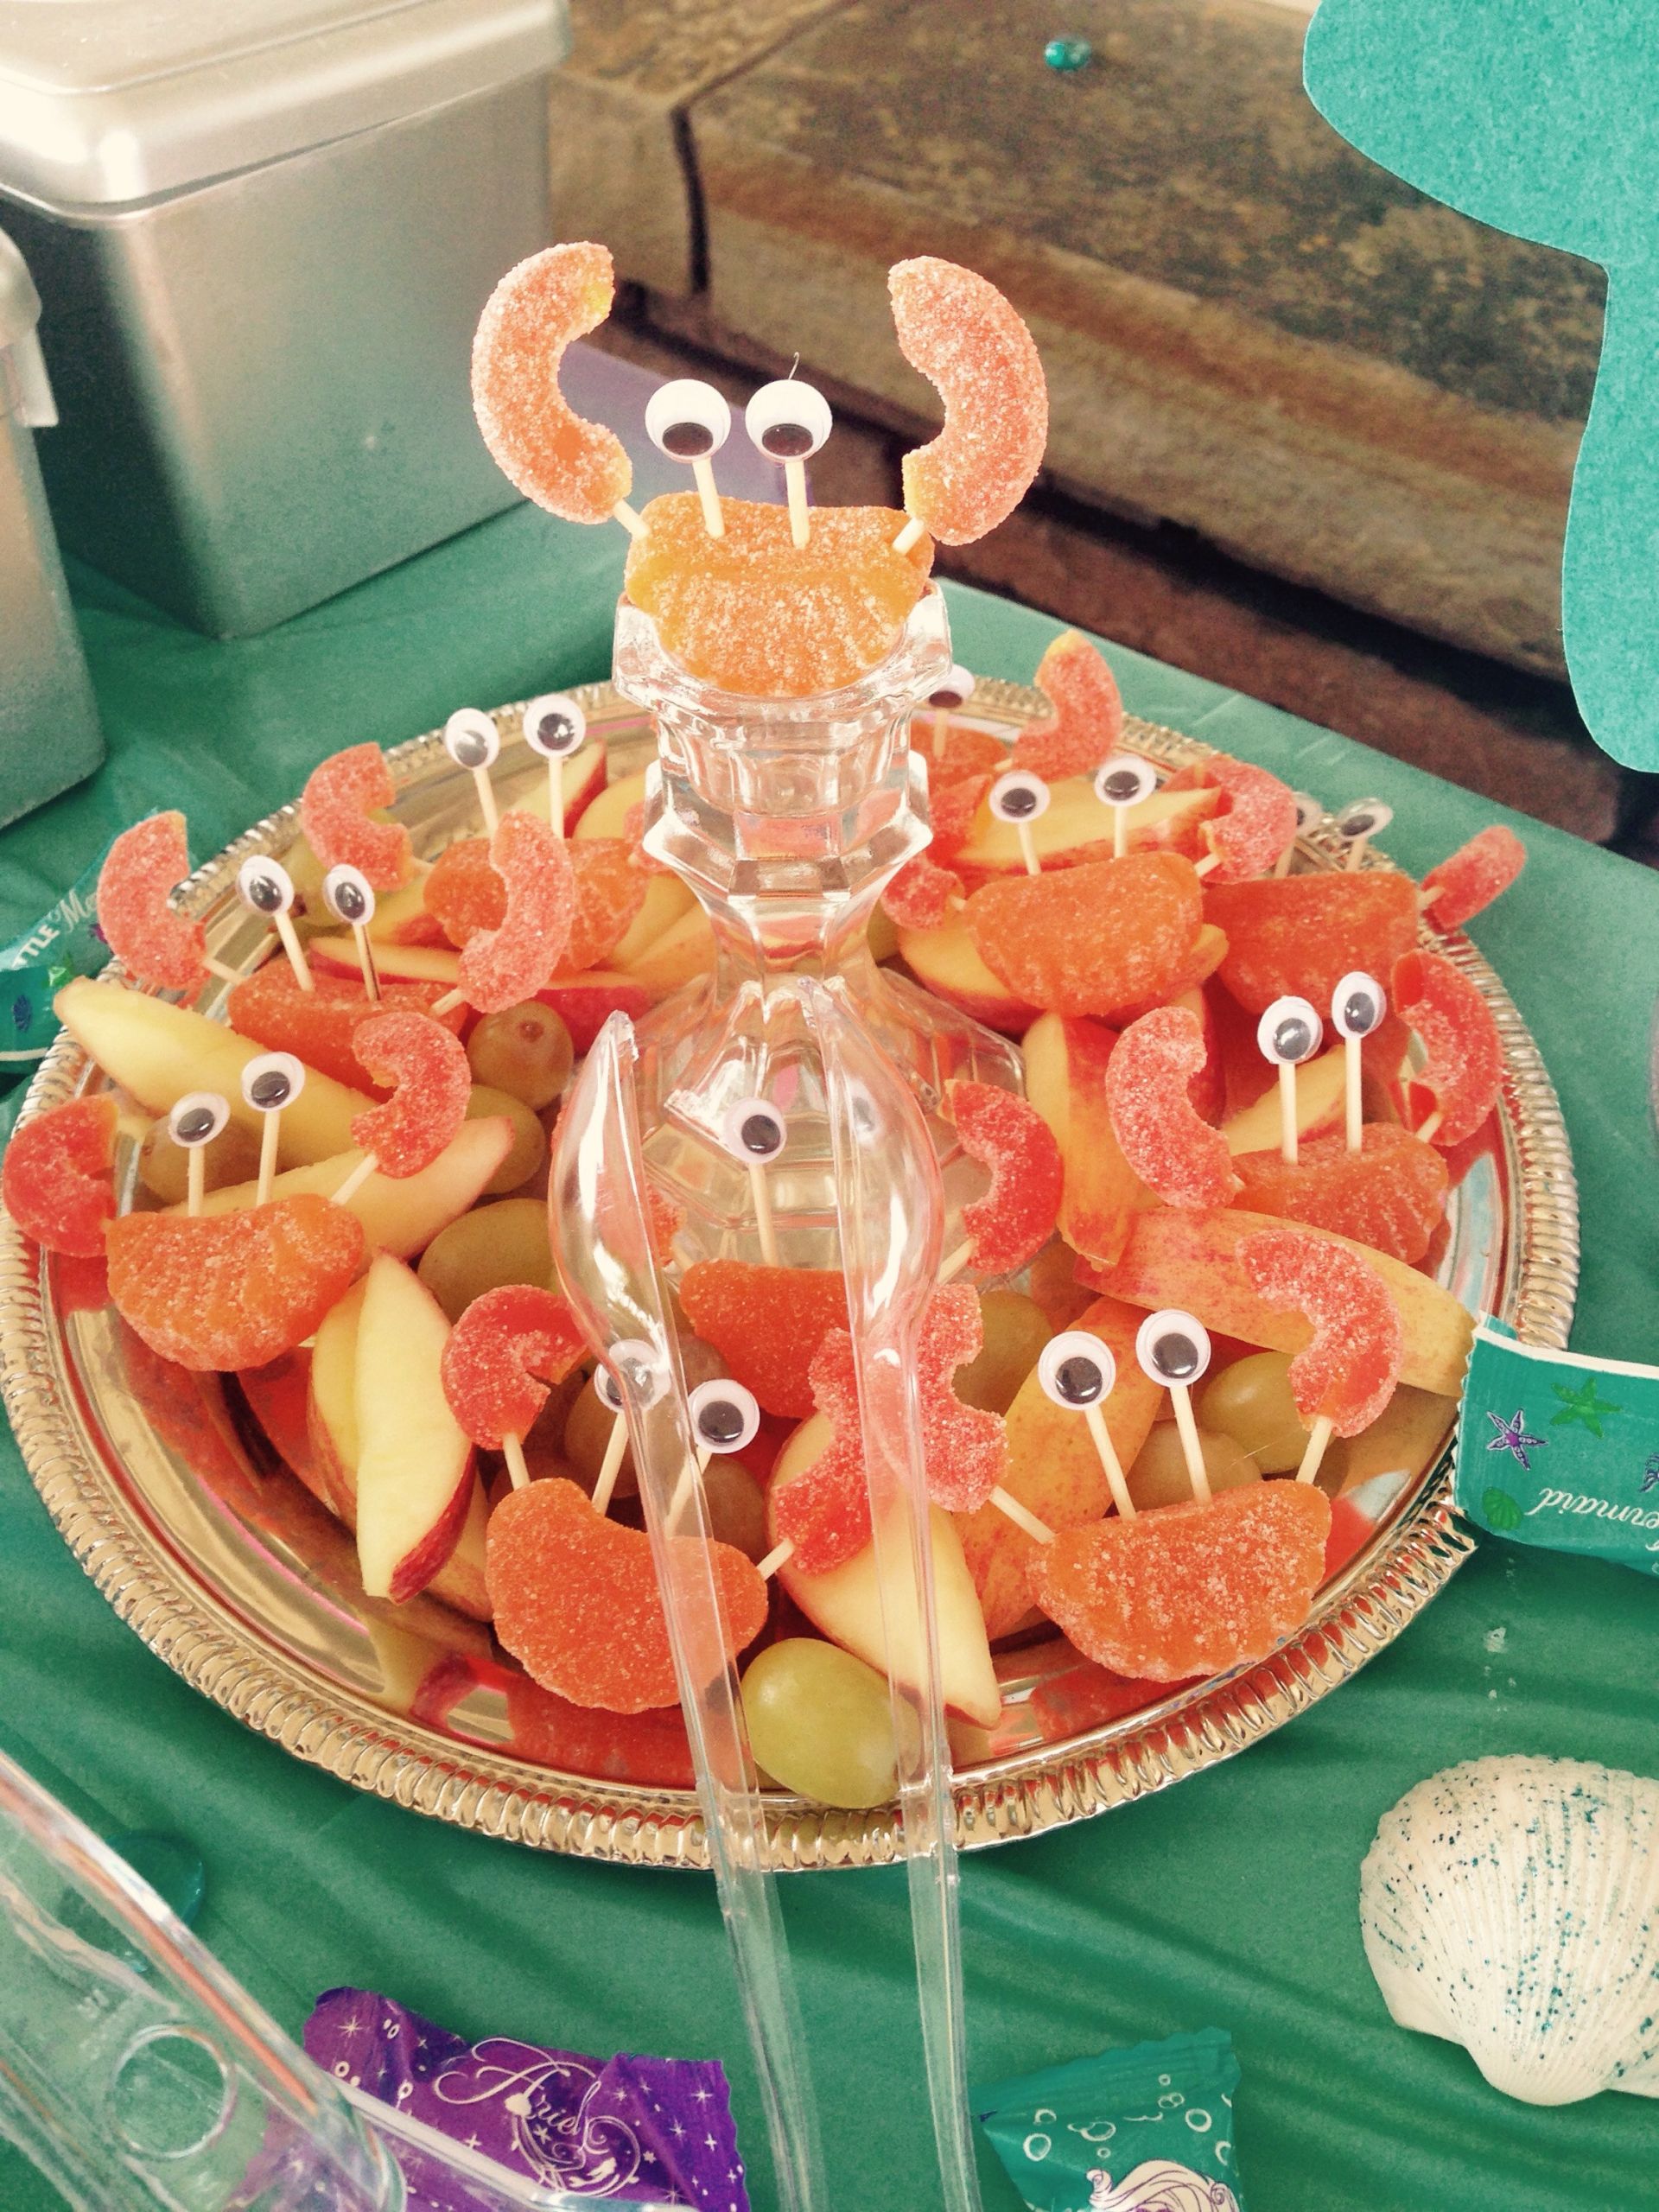 Little Mermaid Party Food Ideas
 The Little Mermaid themed Birthday Party